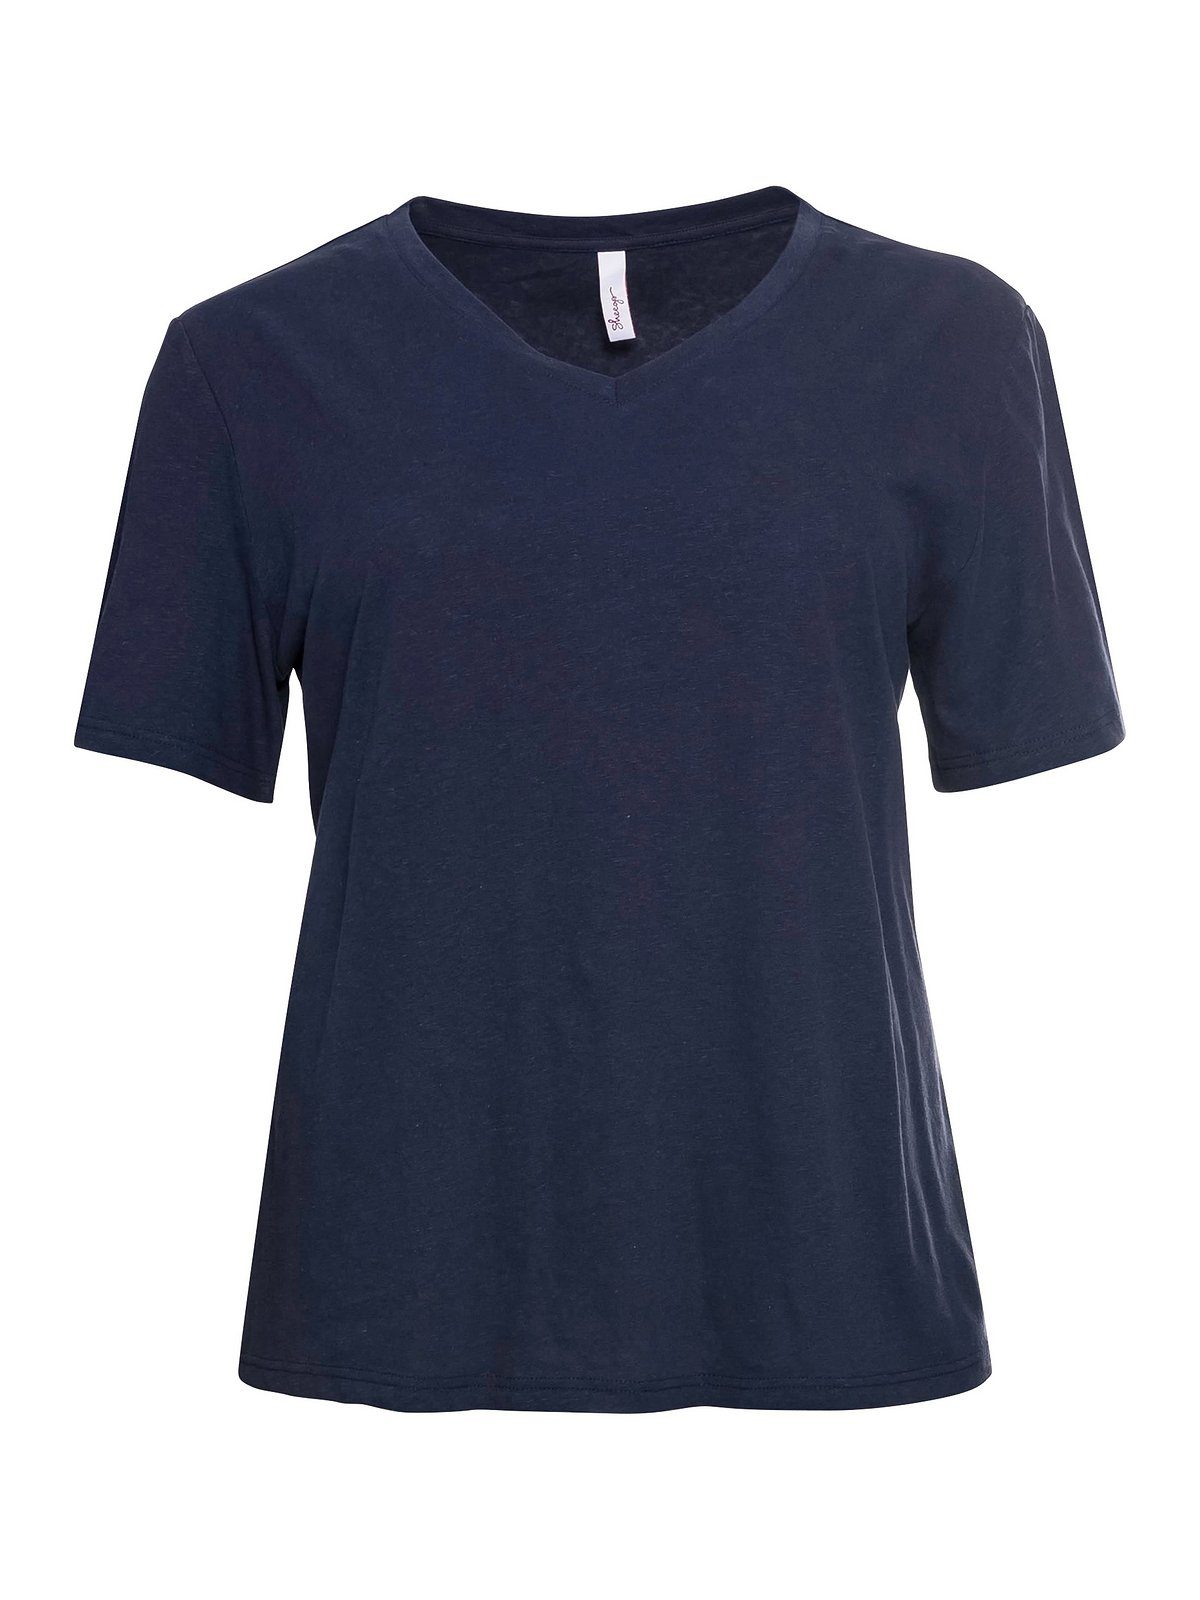 Sheego T-Shirt Große Größen marine Leinen-Viskose-Mix aus edlem